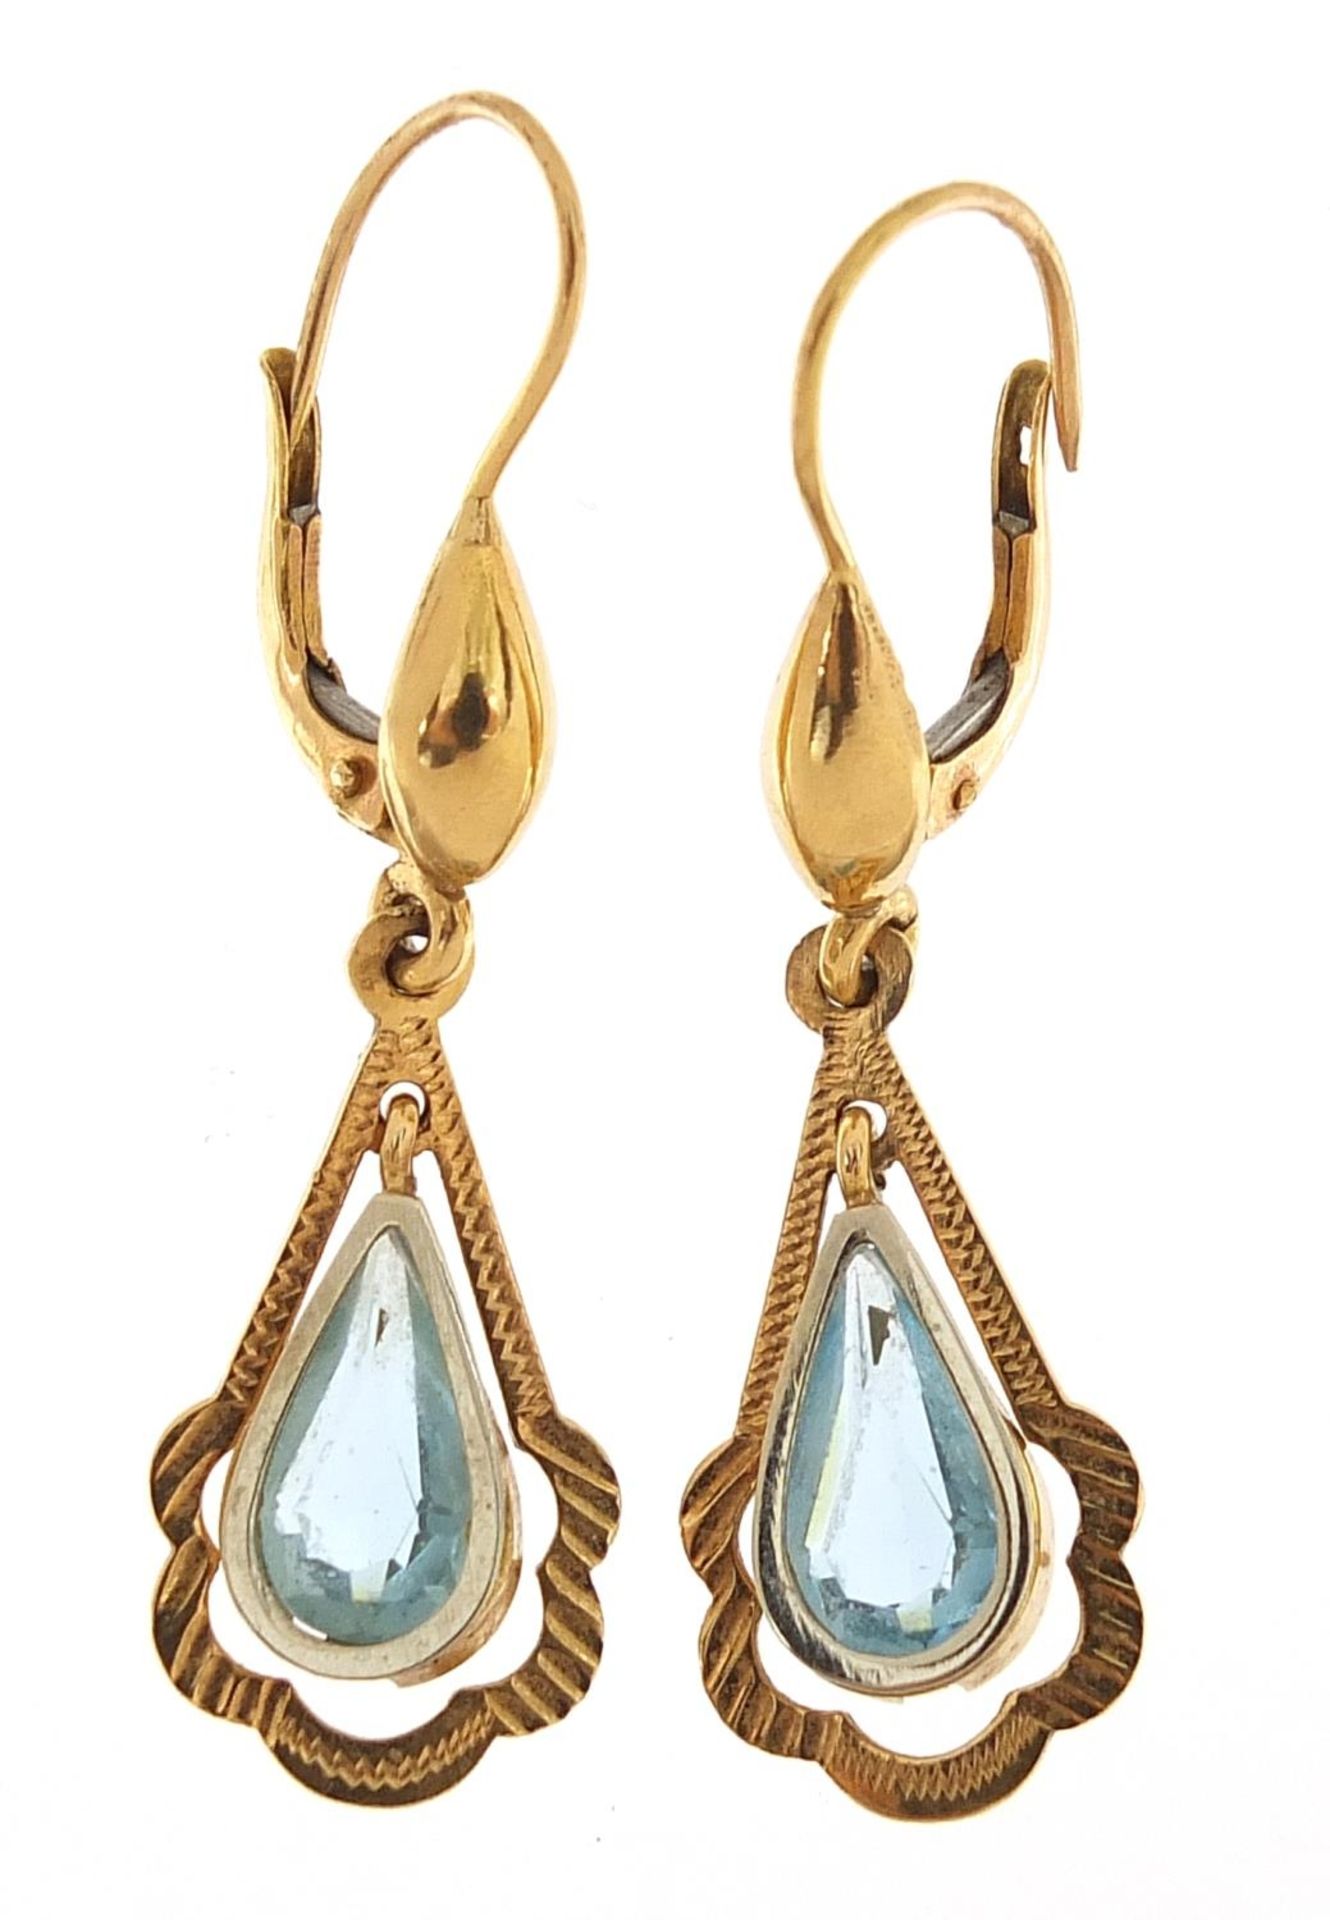 Pair of 18ct gold aquamarine drop earrings, 4.0cm high, 3.9g